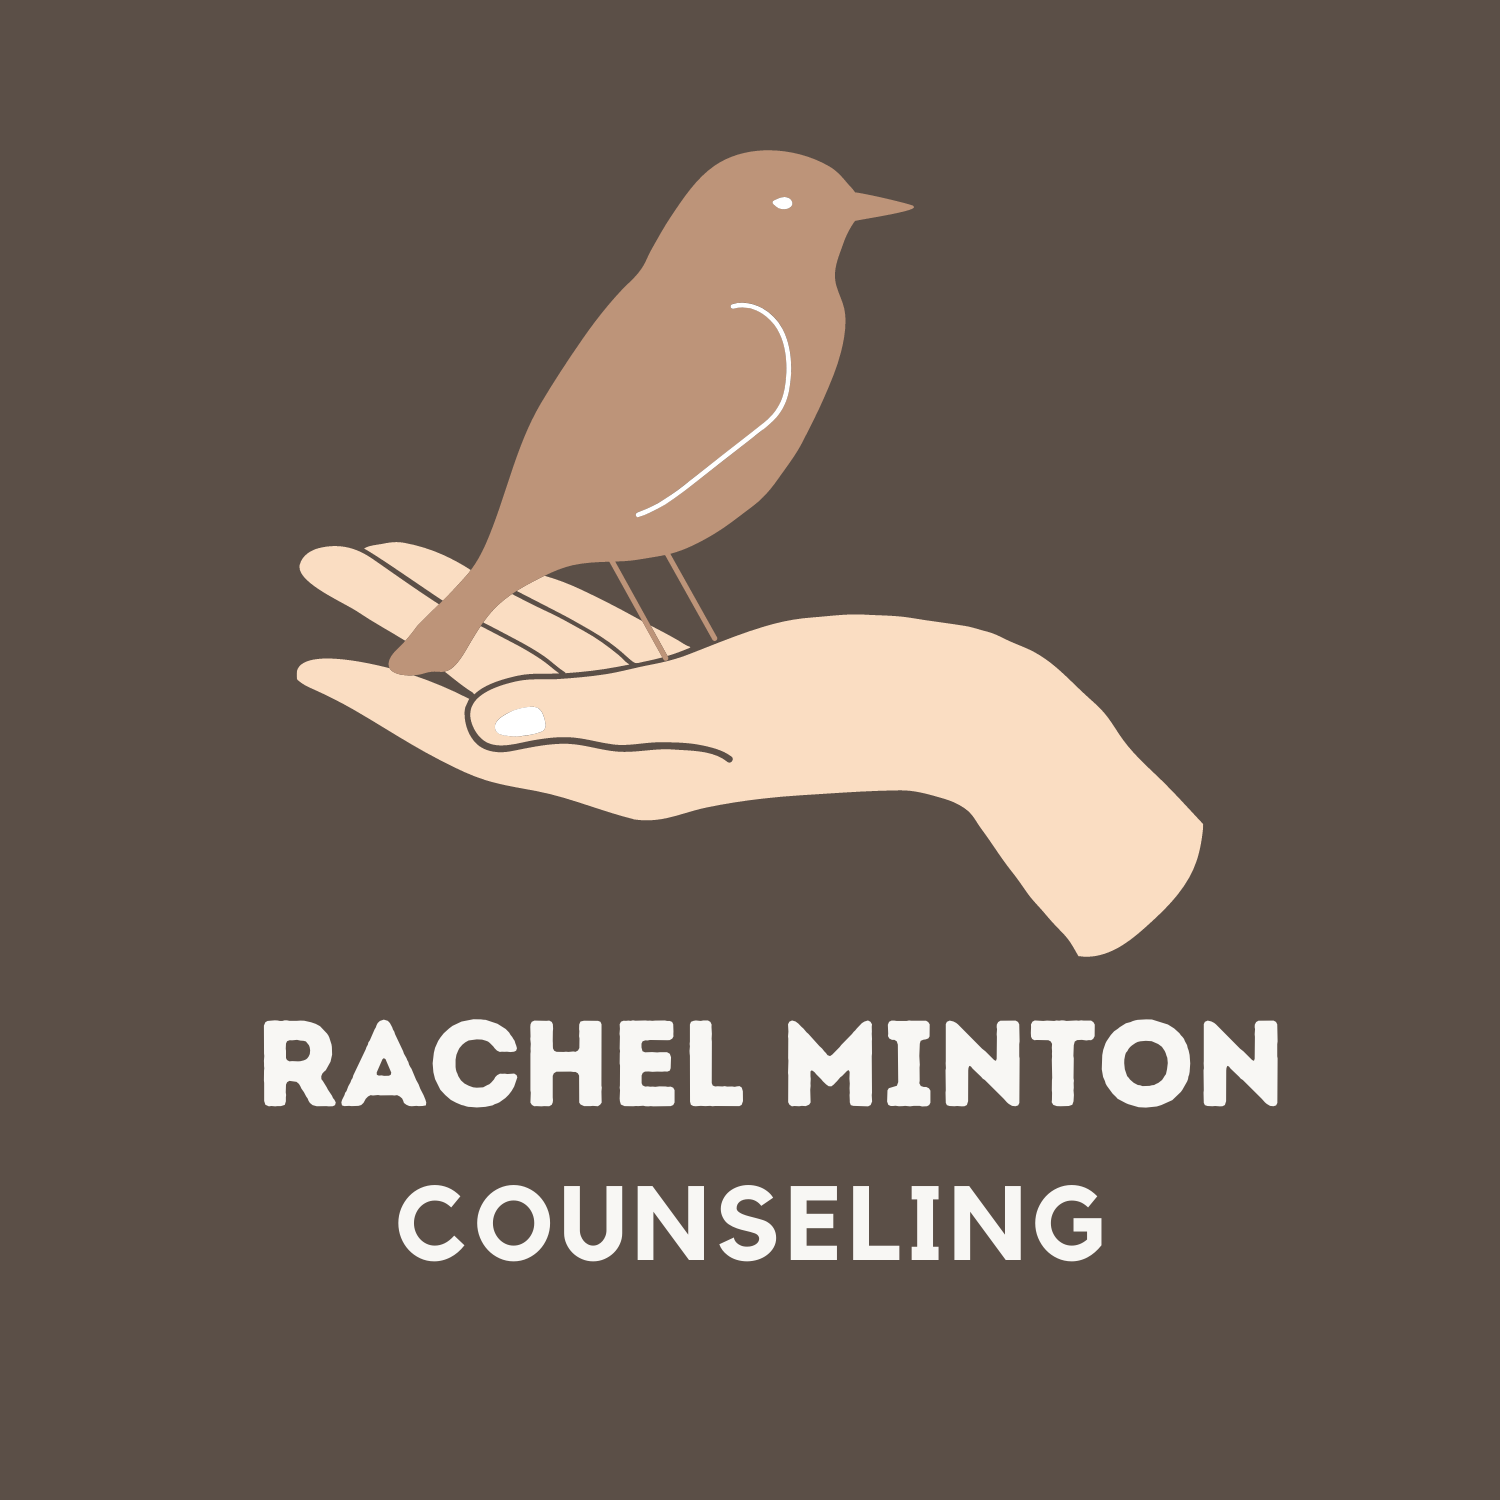 Rachel Minton Counseling